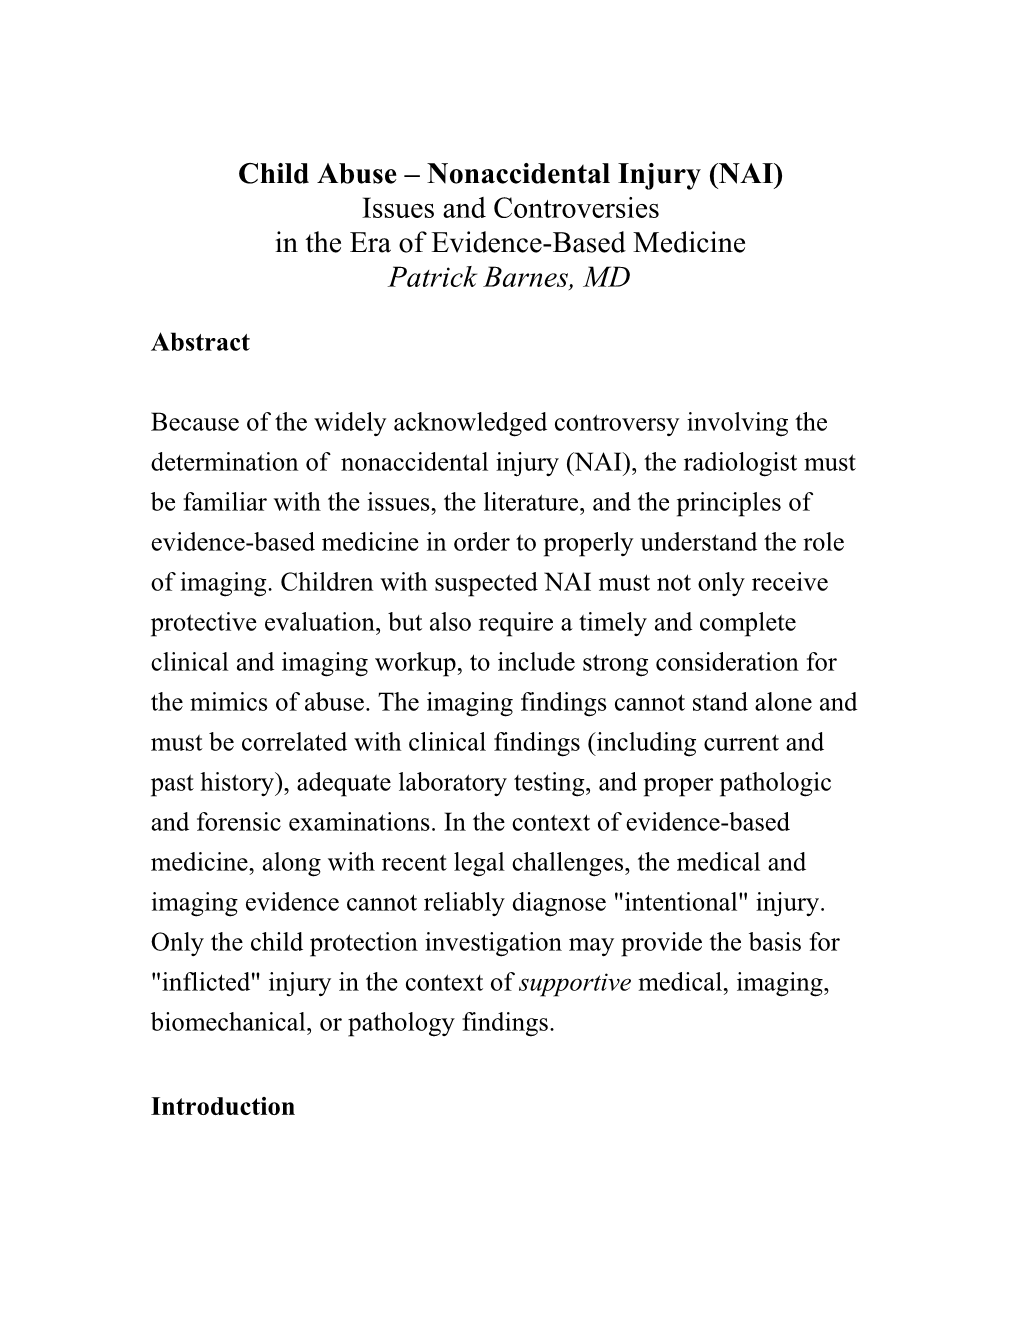 Child Abuse Nonaccidental Injury (NAI)